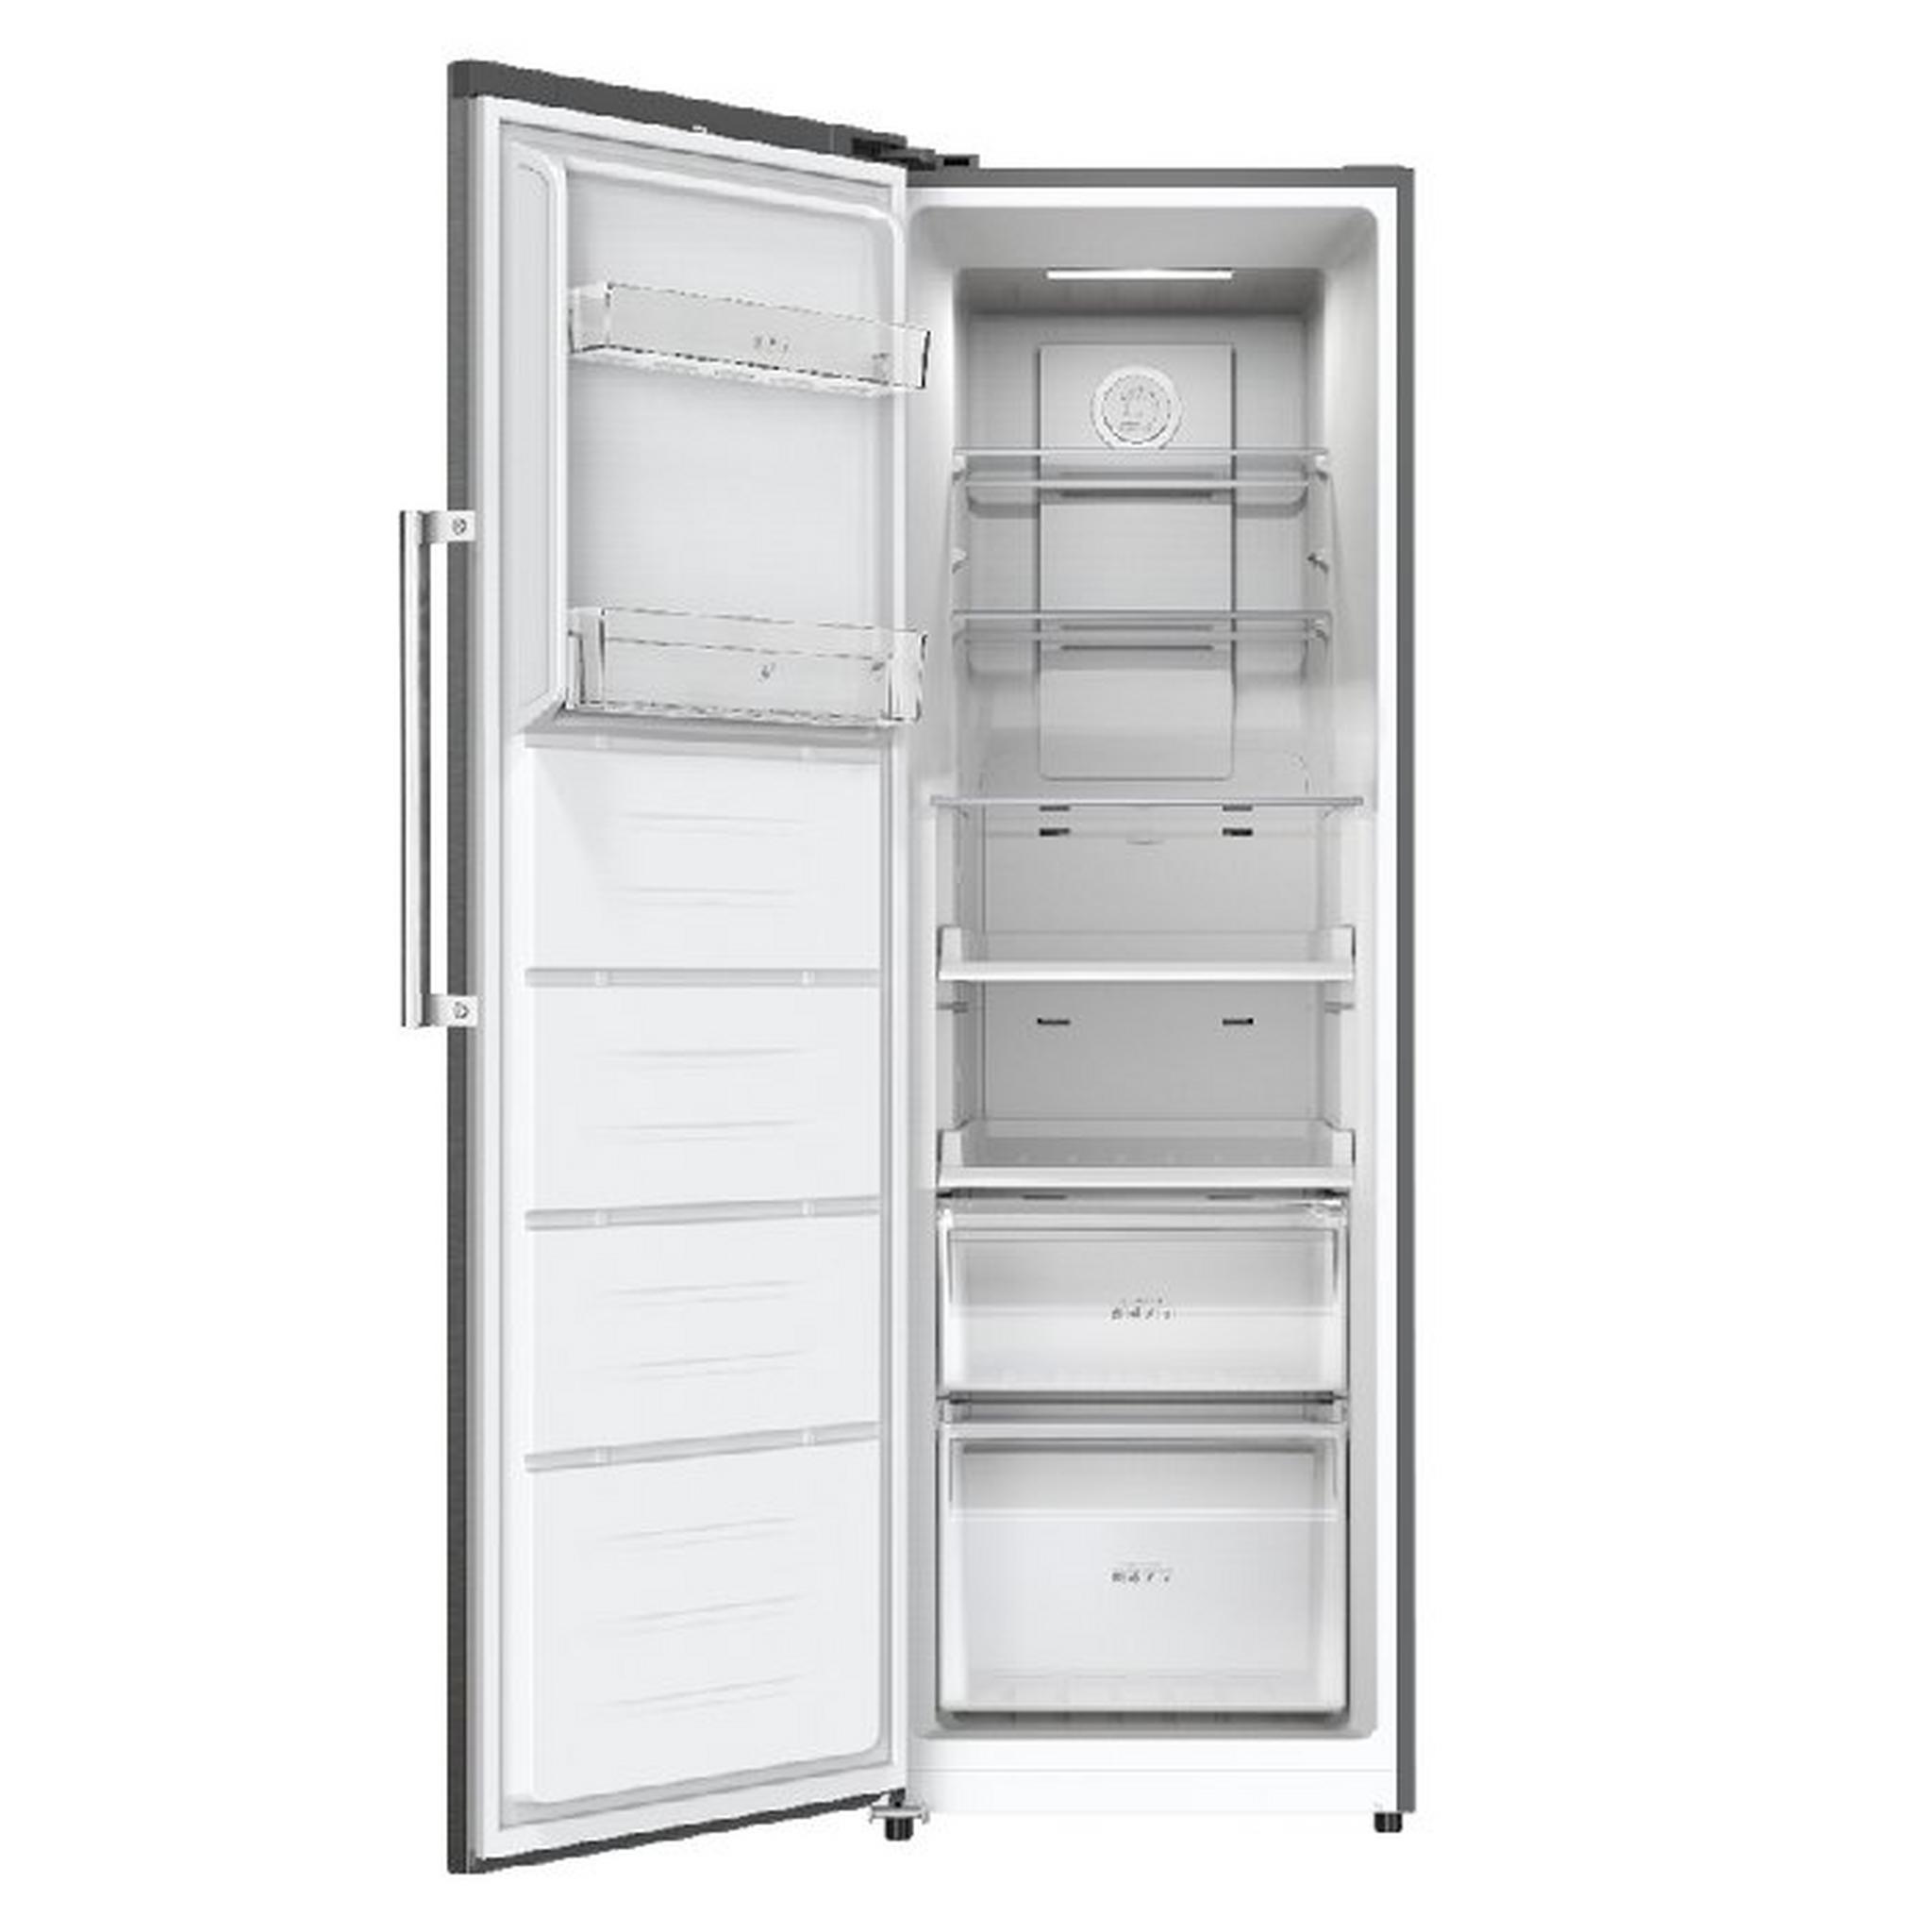 Wansa Upright Freezer 11 Cft + Single Door Refrigerator 13.7 Cft